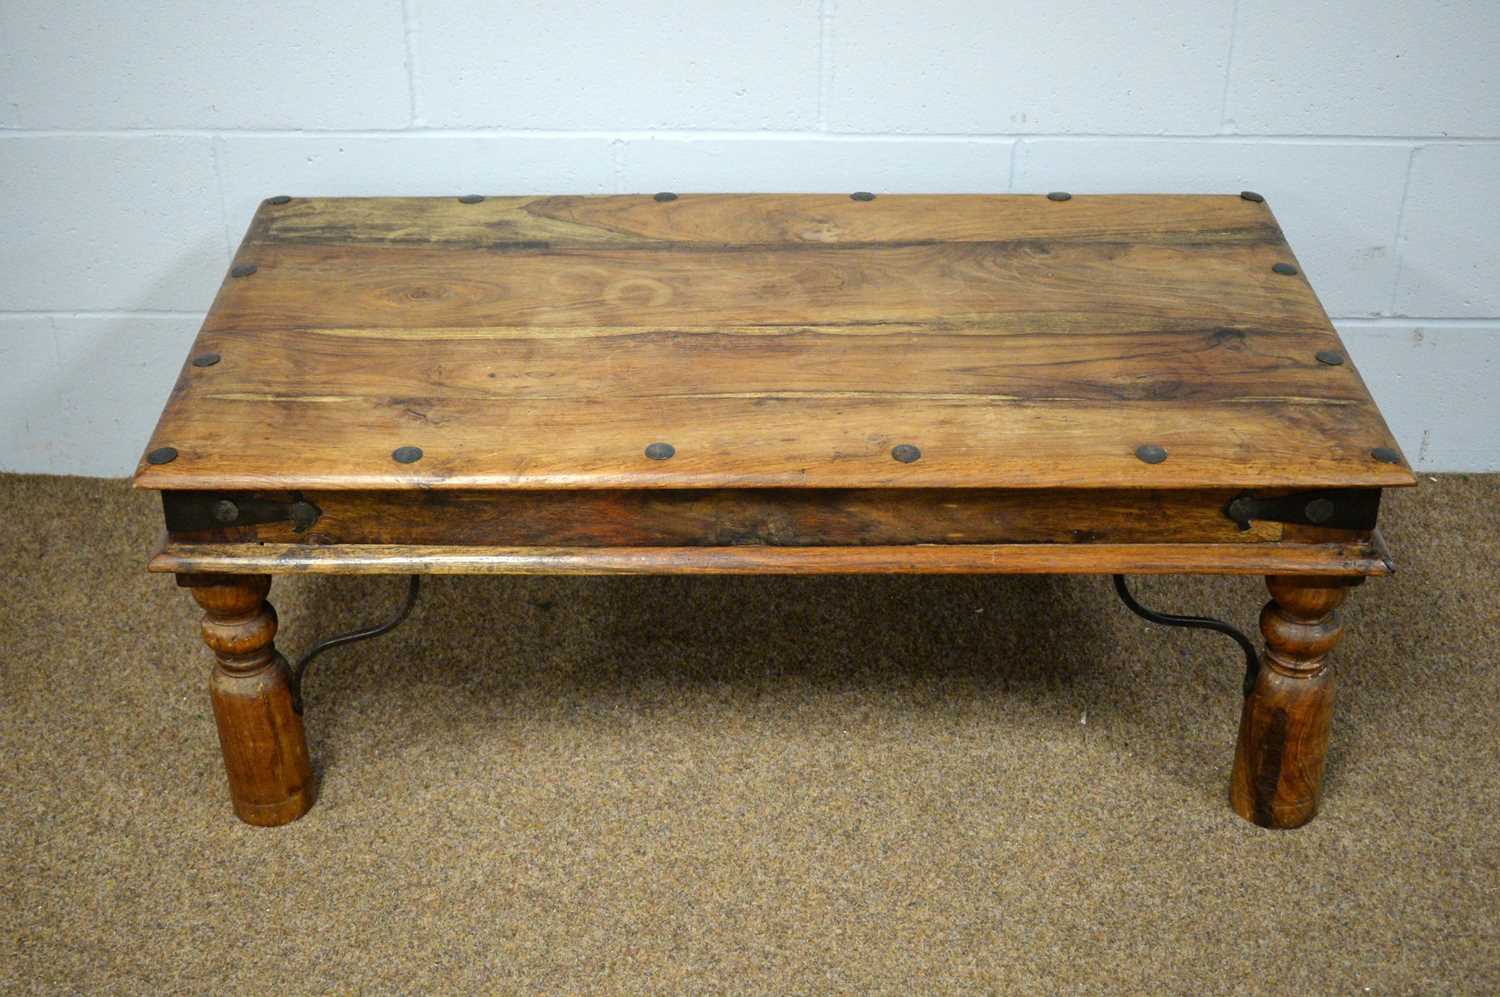 A 20th Century hardwood coffee table.